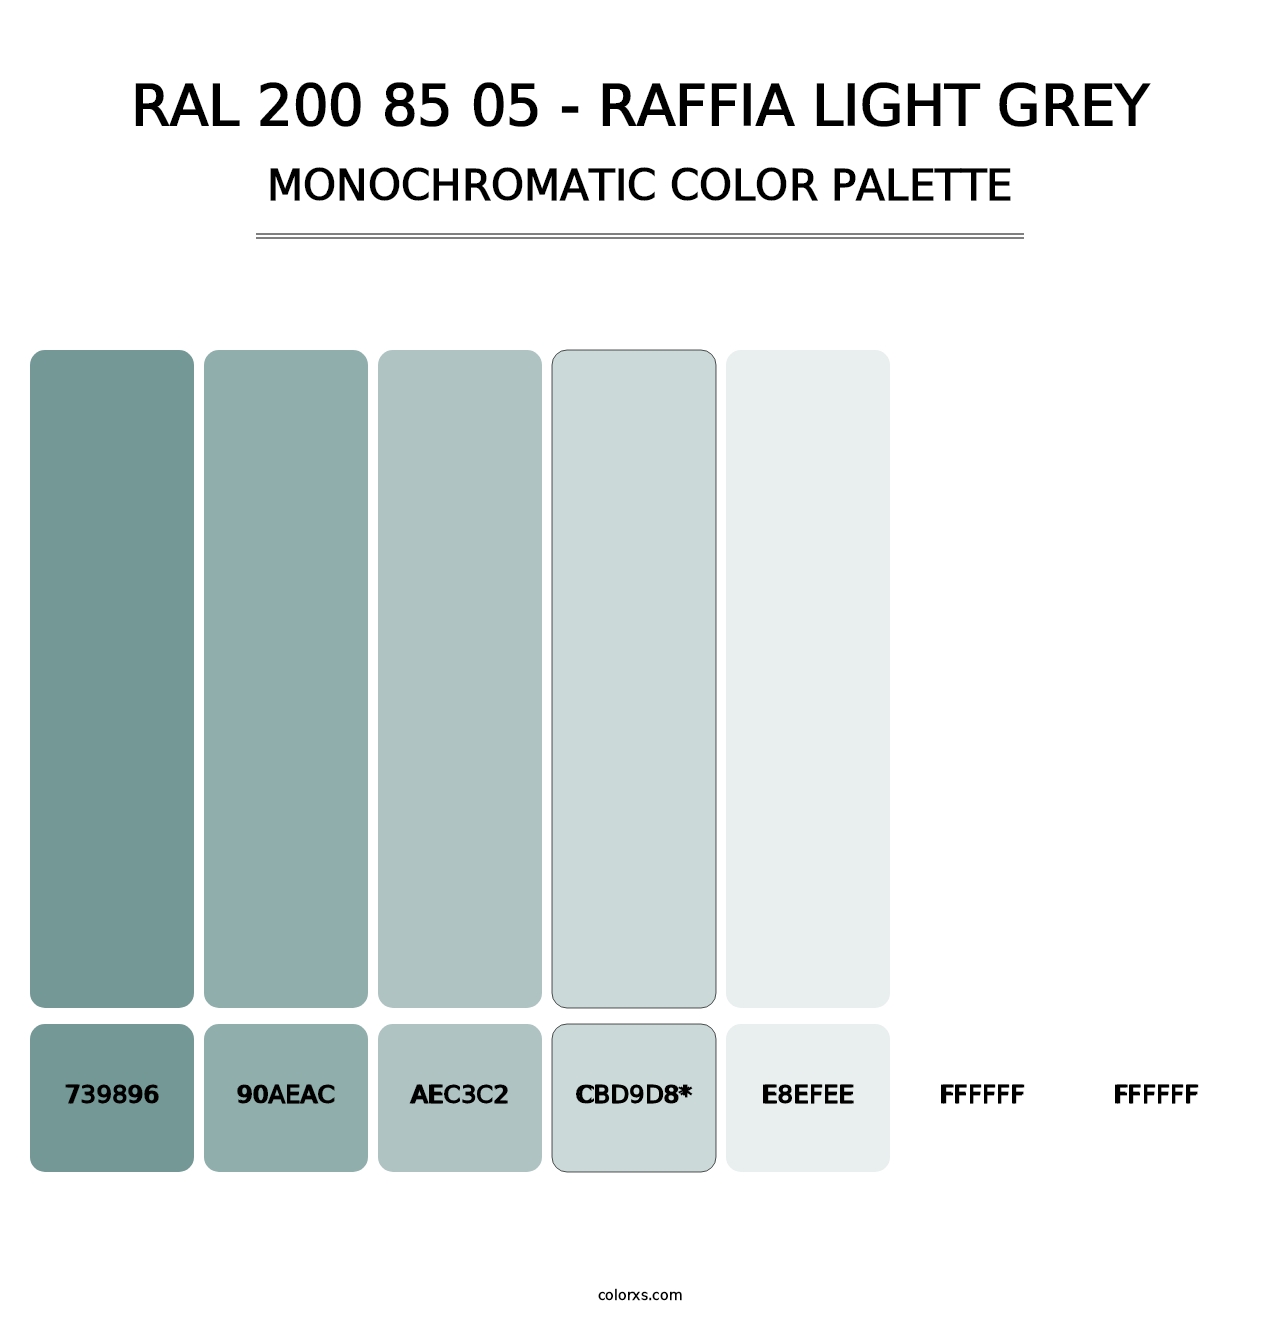 RAL 200 85 05 - Raffia Light Grey - Monochromatic Color Palette